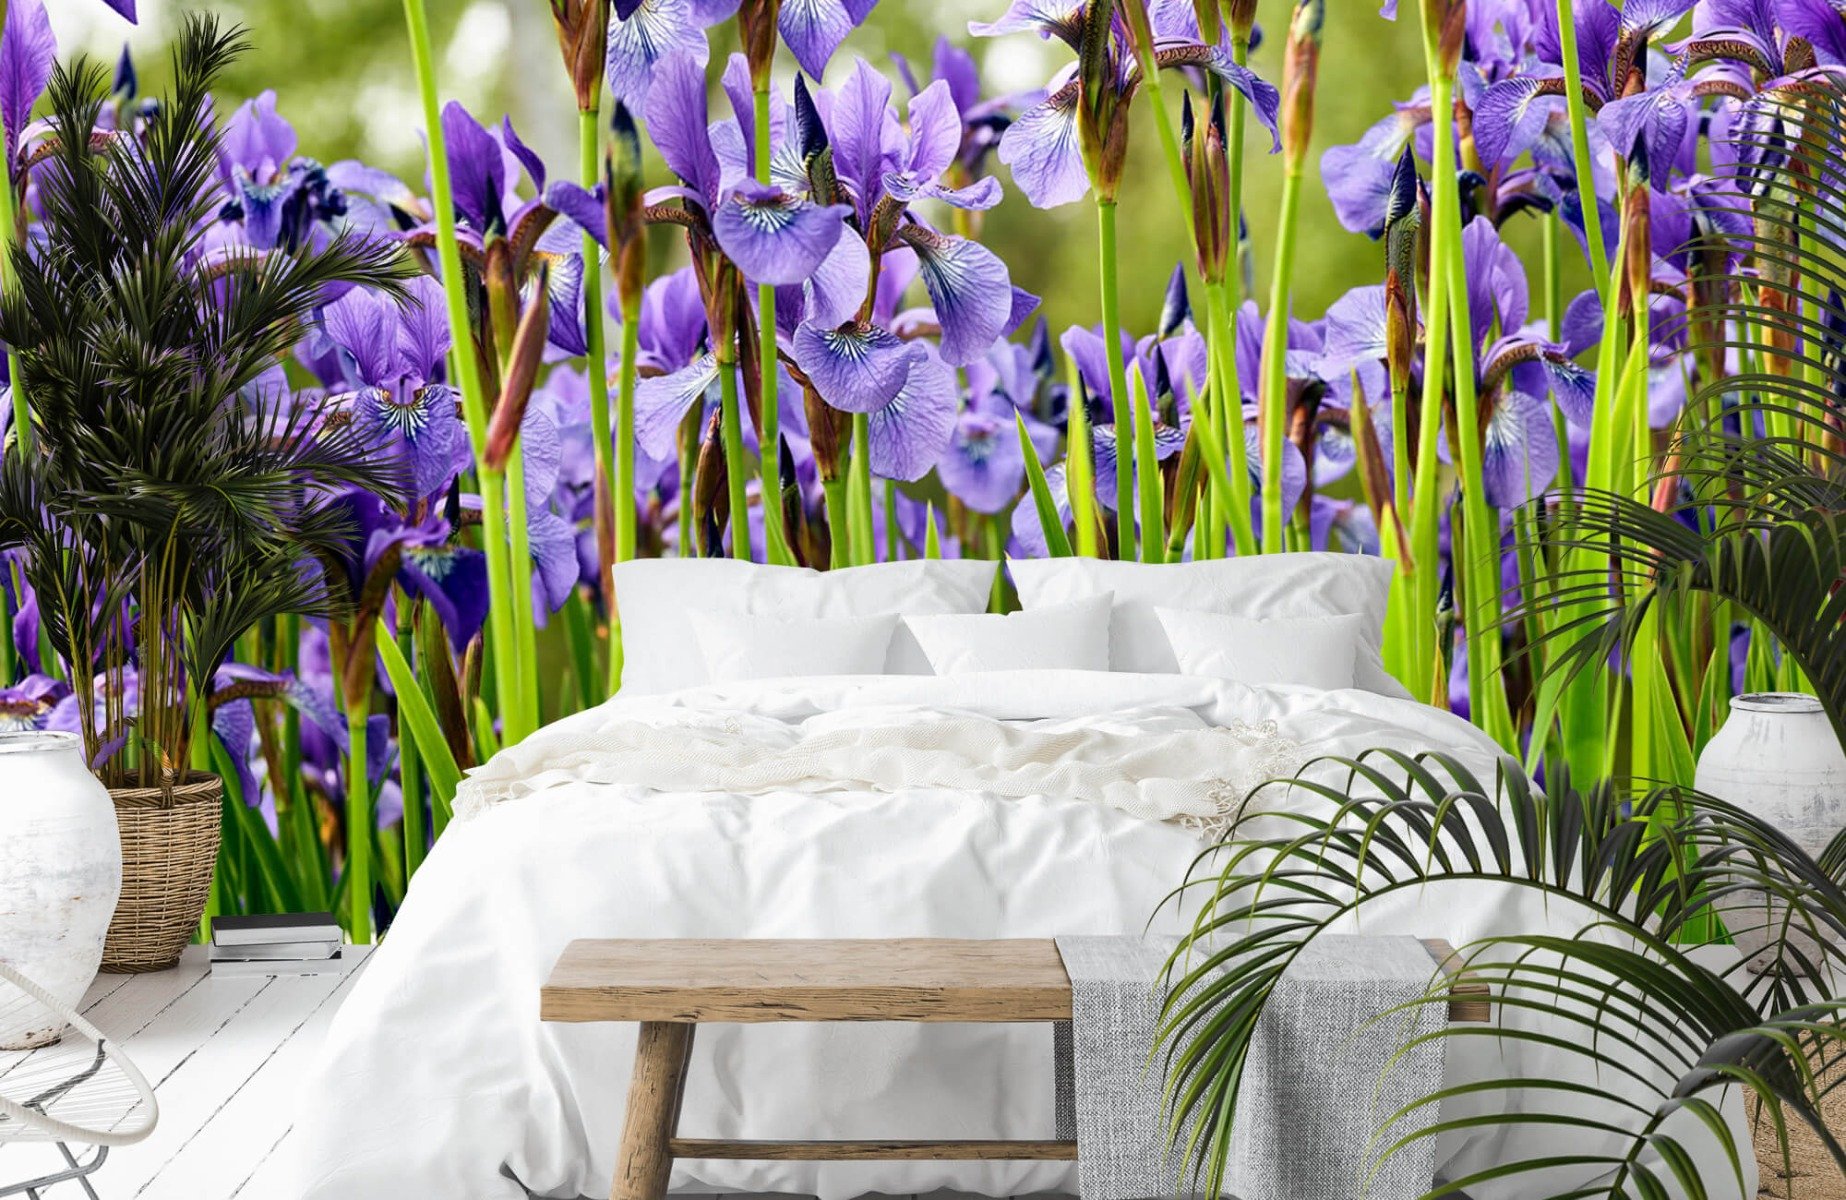 Flower fields - Irises  - Bedroom 14